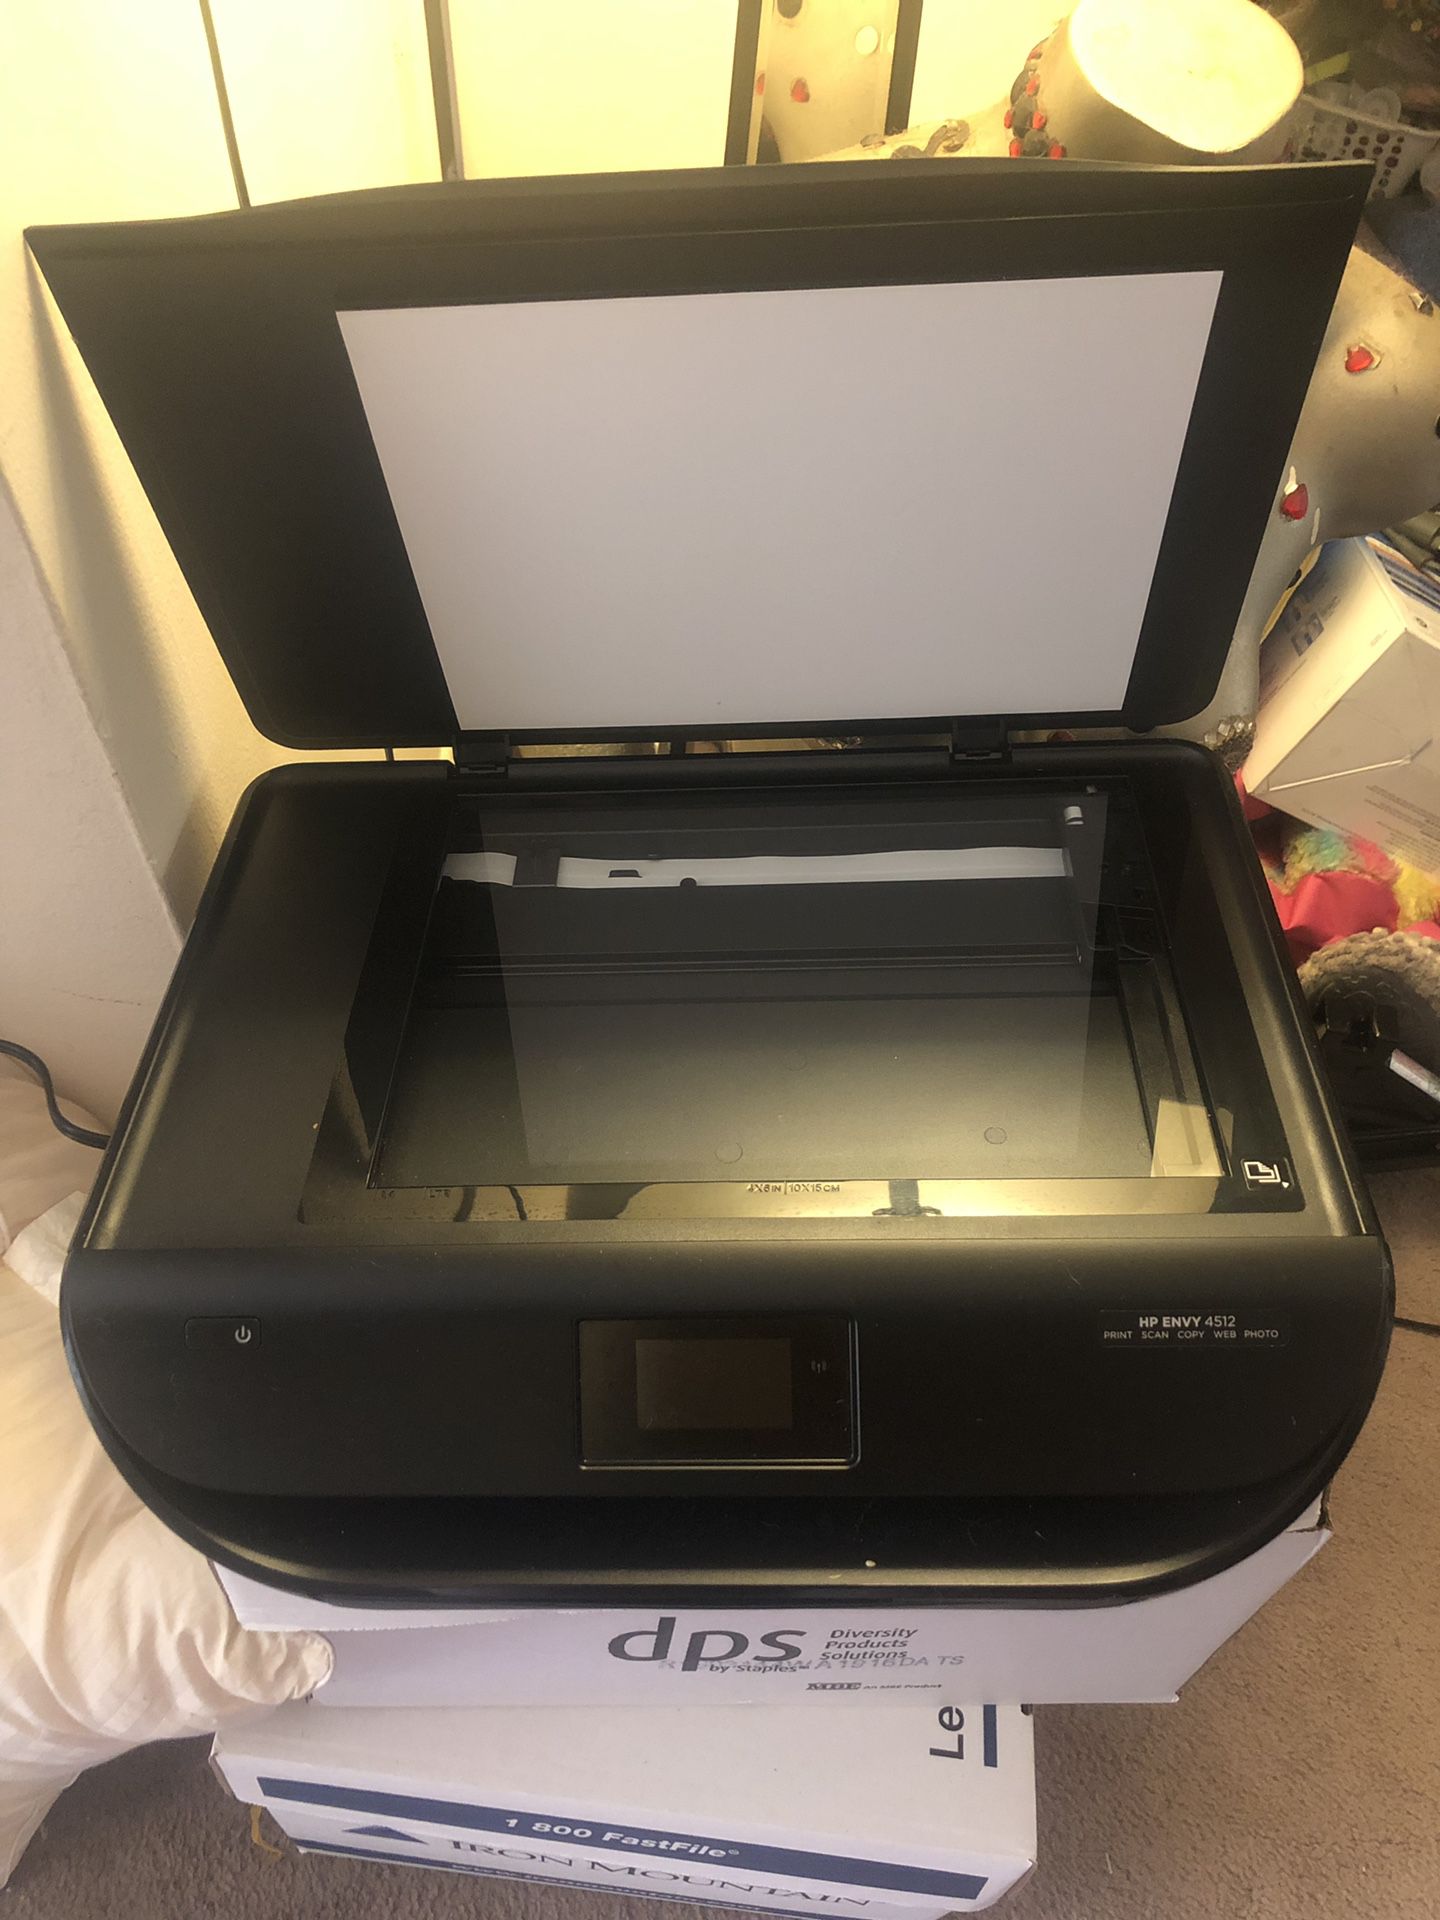 Hp printer copier scanner